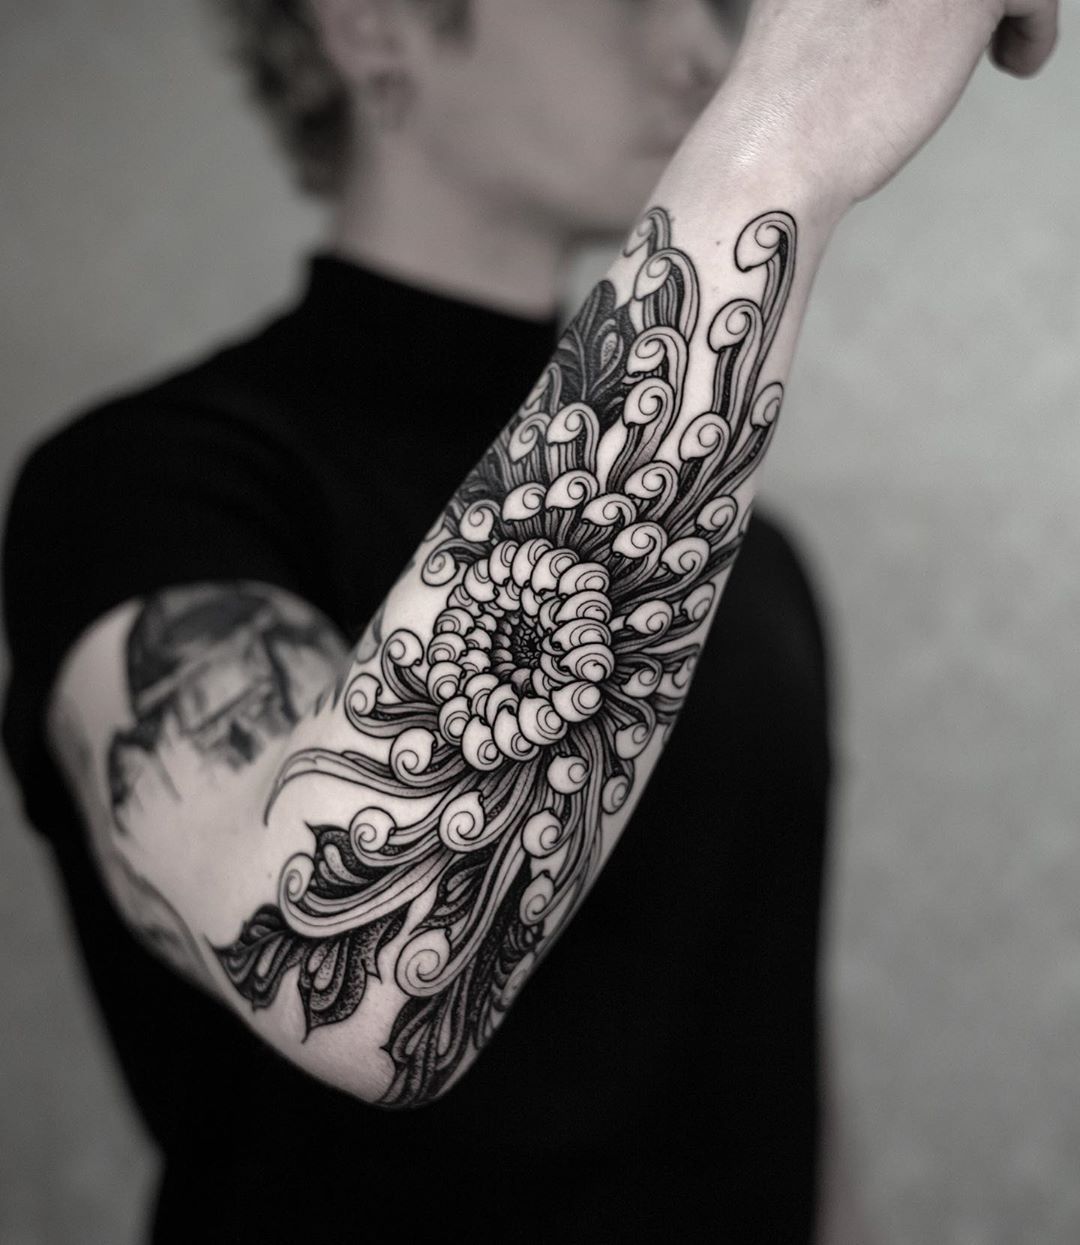 Tattoo tagged with: big, blackwork, chrysanthemum, facebook, flower,  illustrative, katesv, nature, shoulder, twitter | inked-app.com